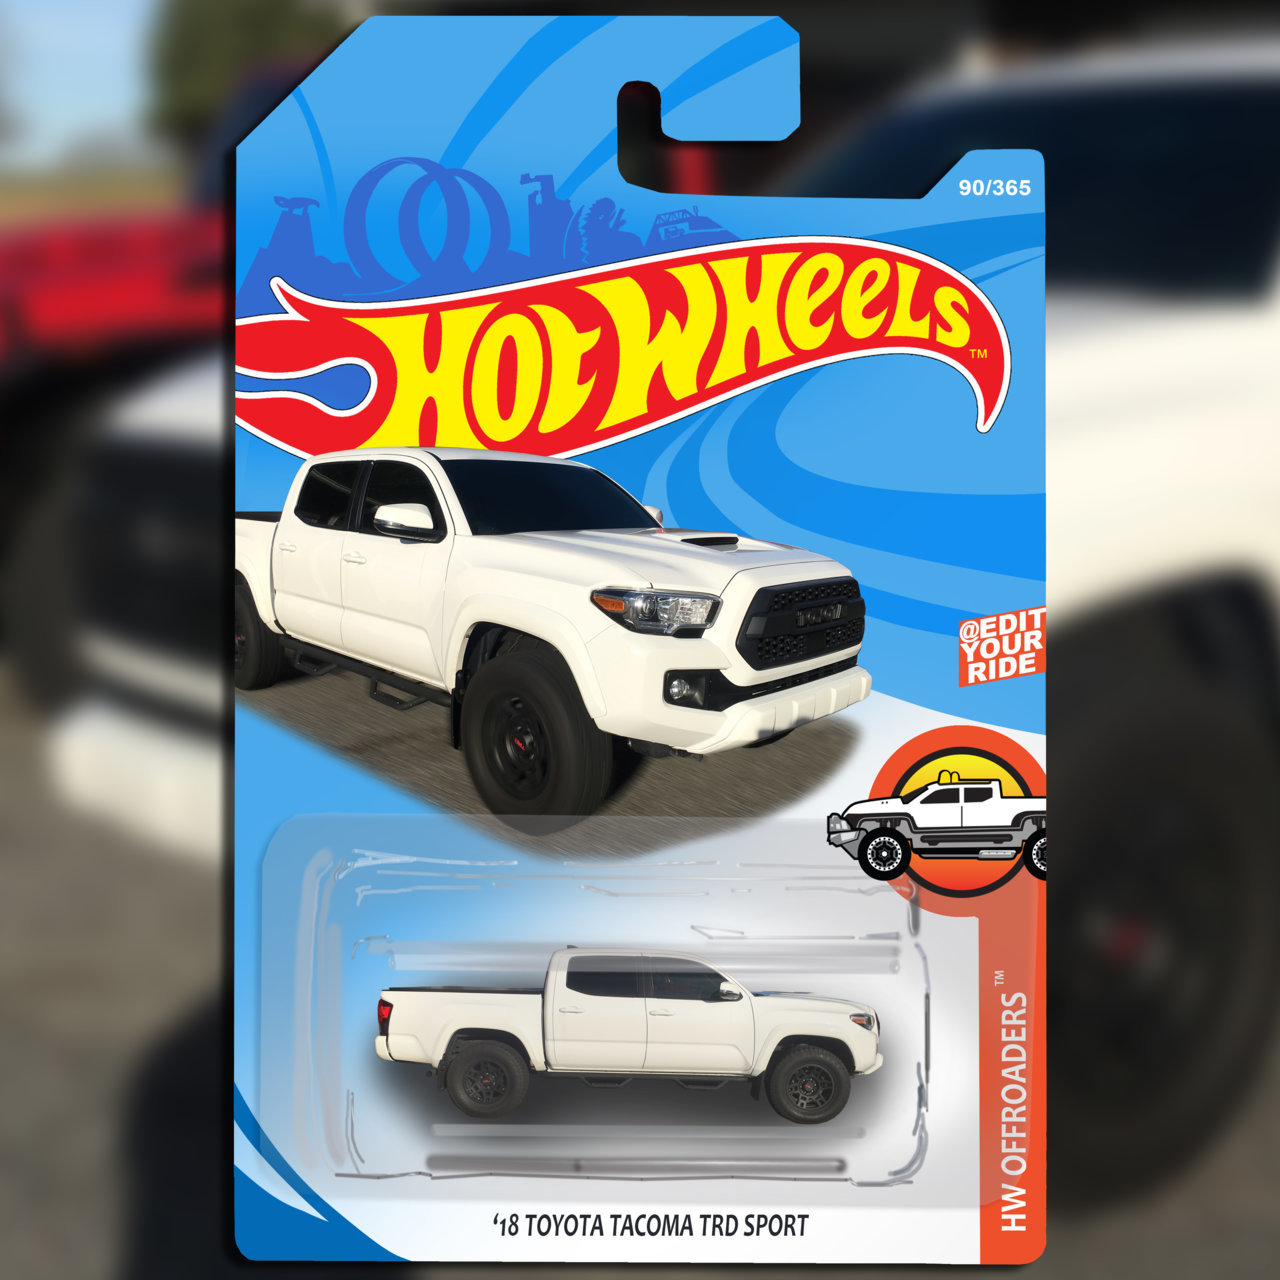 2018 toyota tacoma toy truck